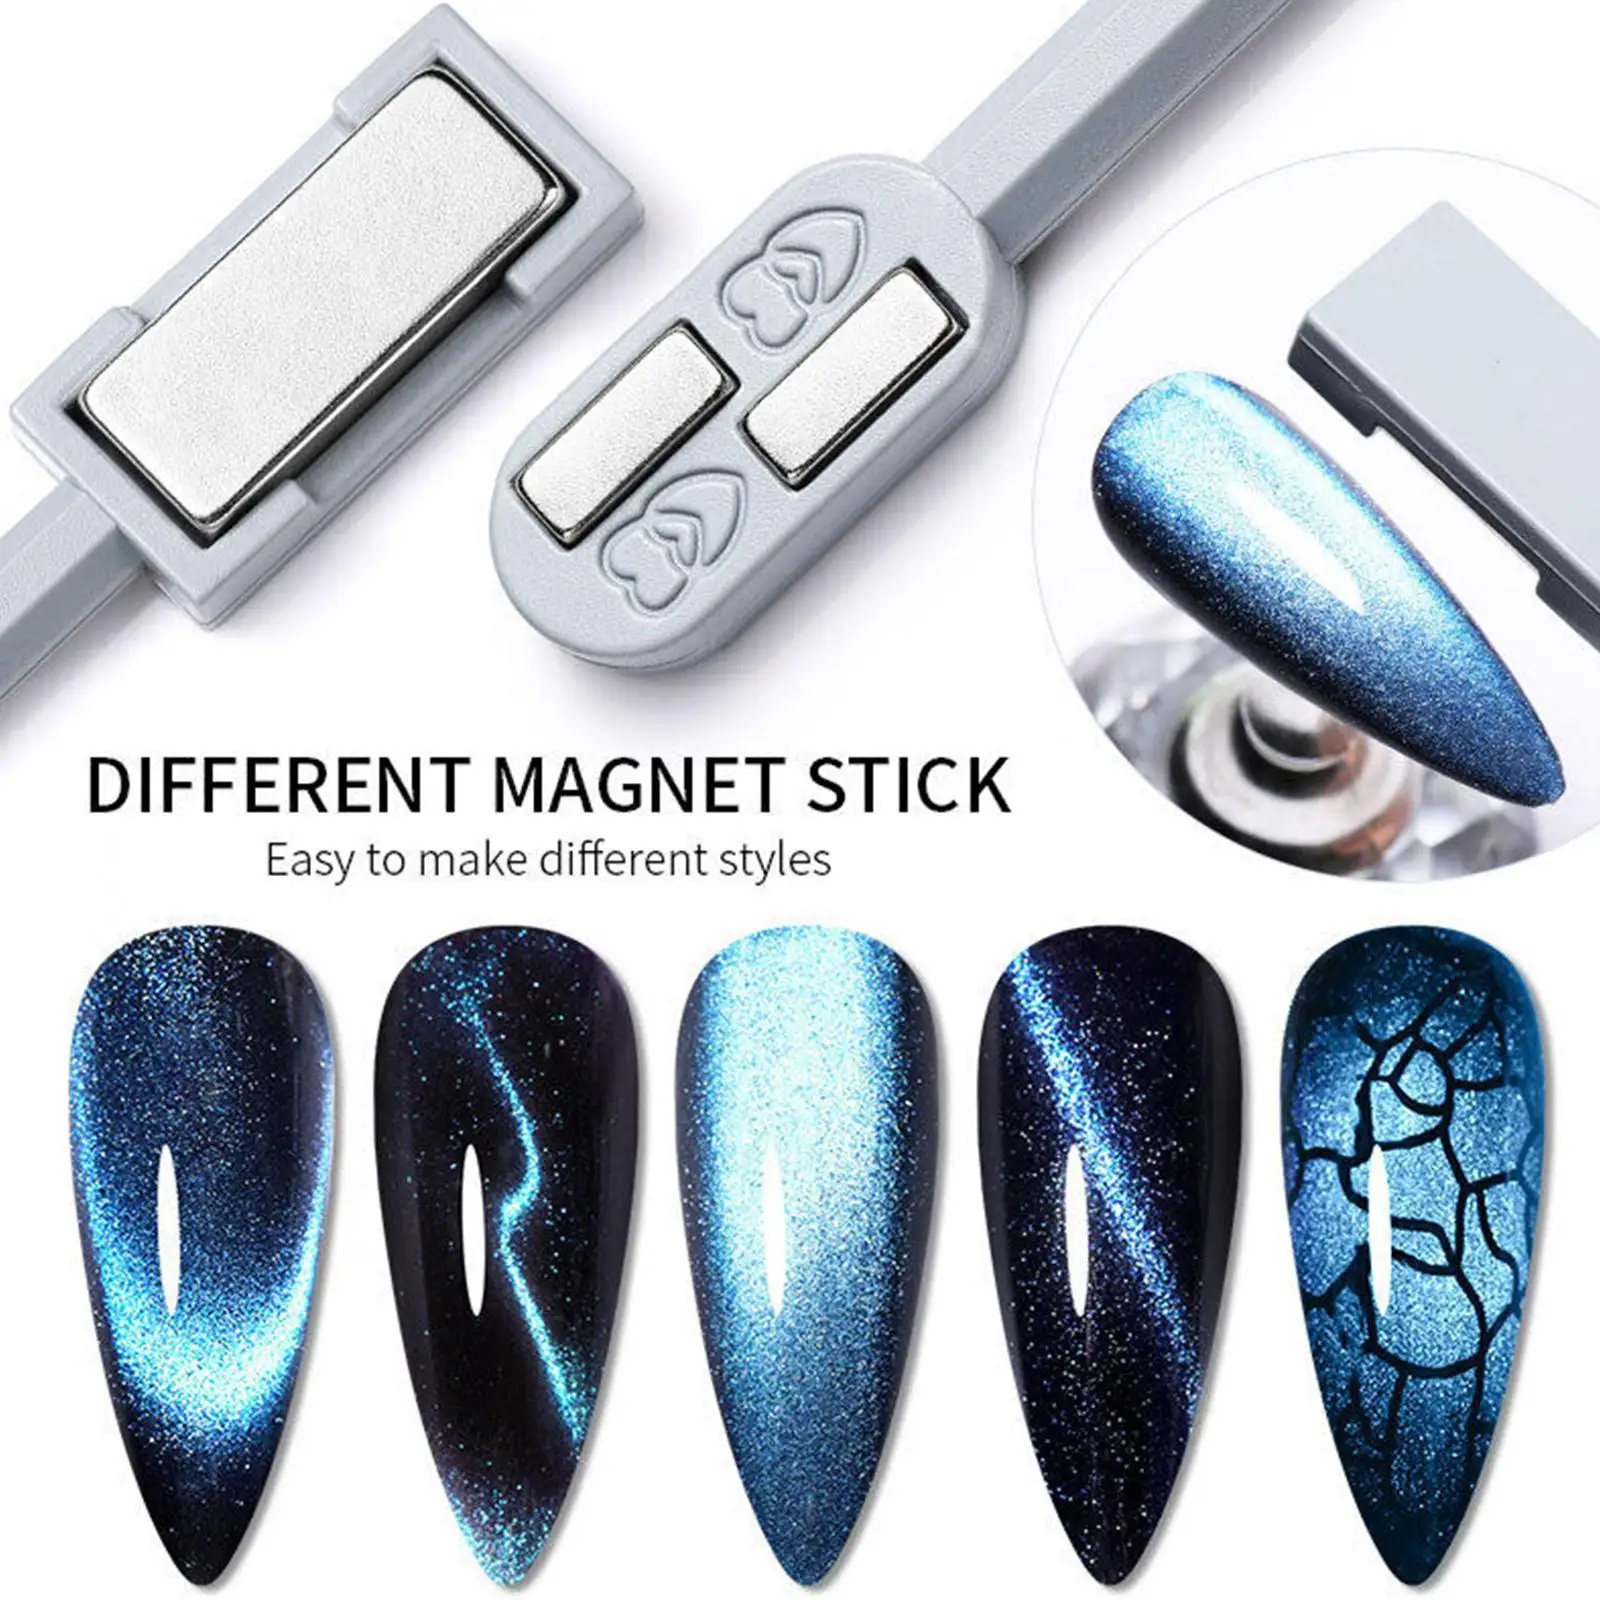 

Cat Eye Nail Magnet Tools Single Double Head Cat Eye Gel Magnet Stick Curved Line Strip 3D Designs For Polish Gel Nail Art Decor